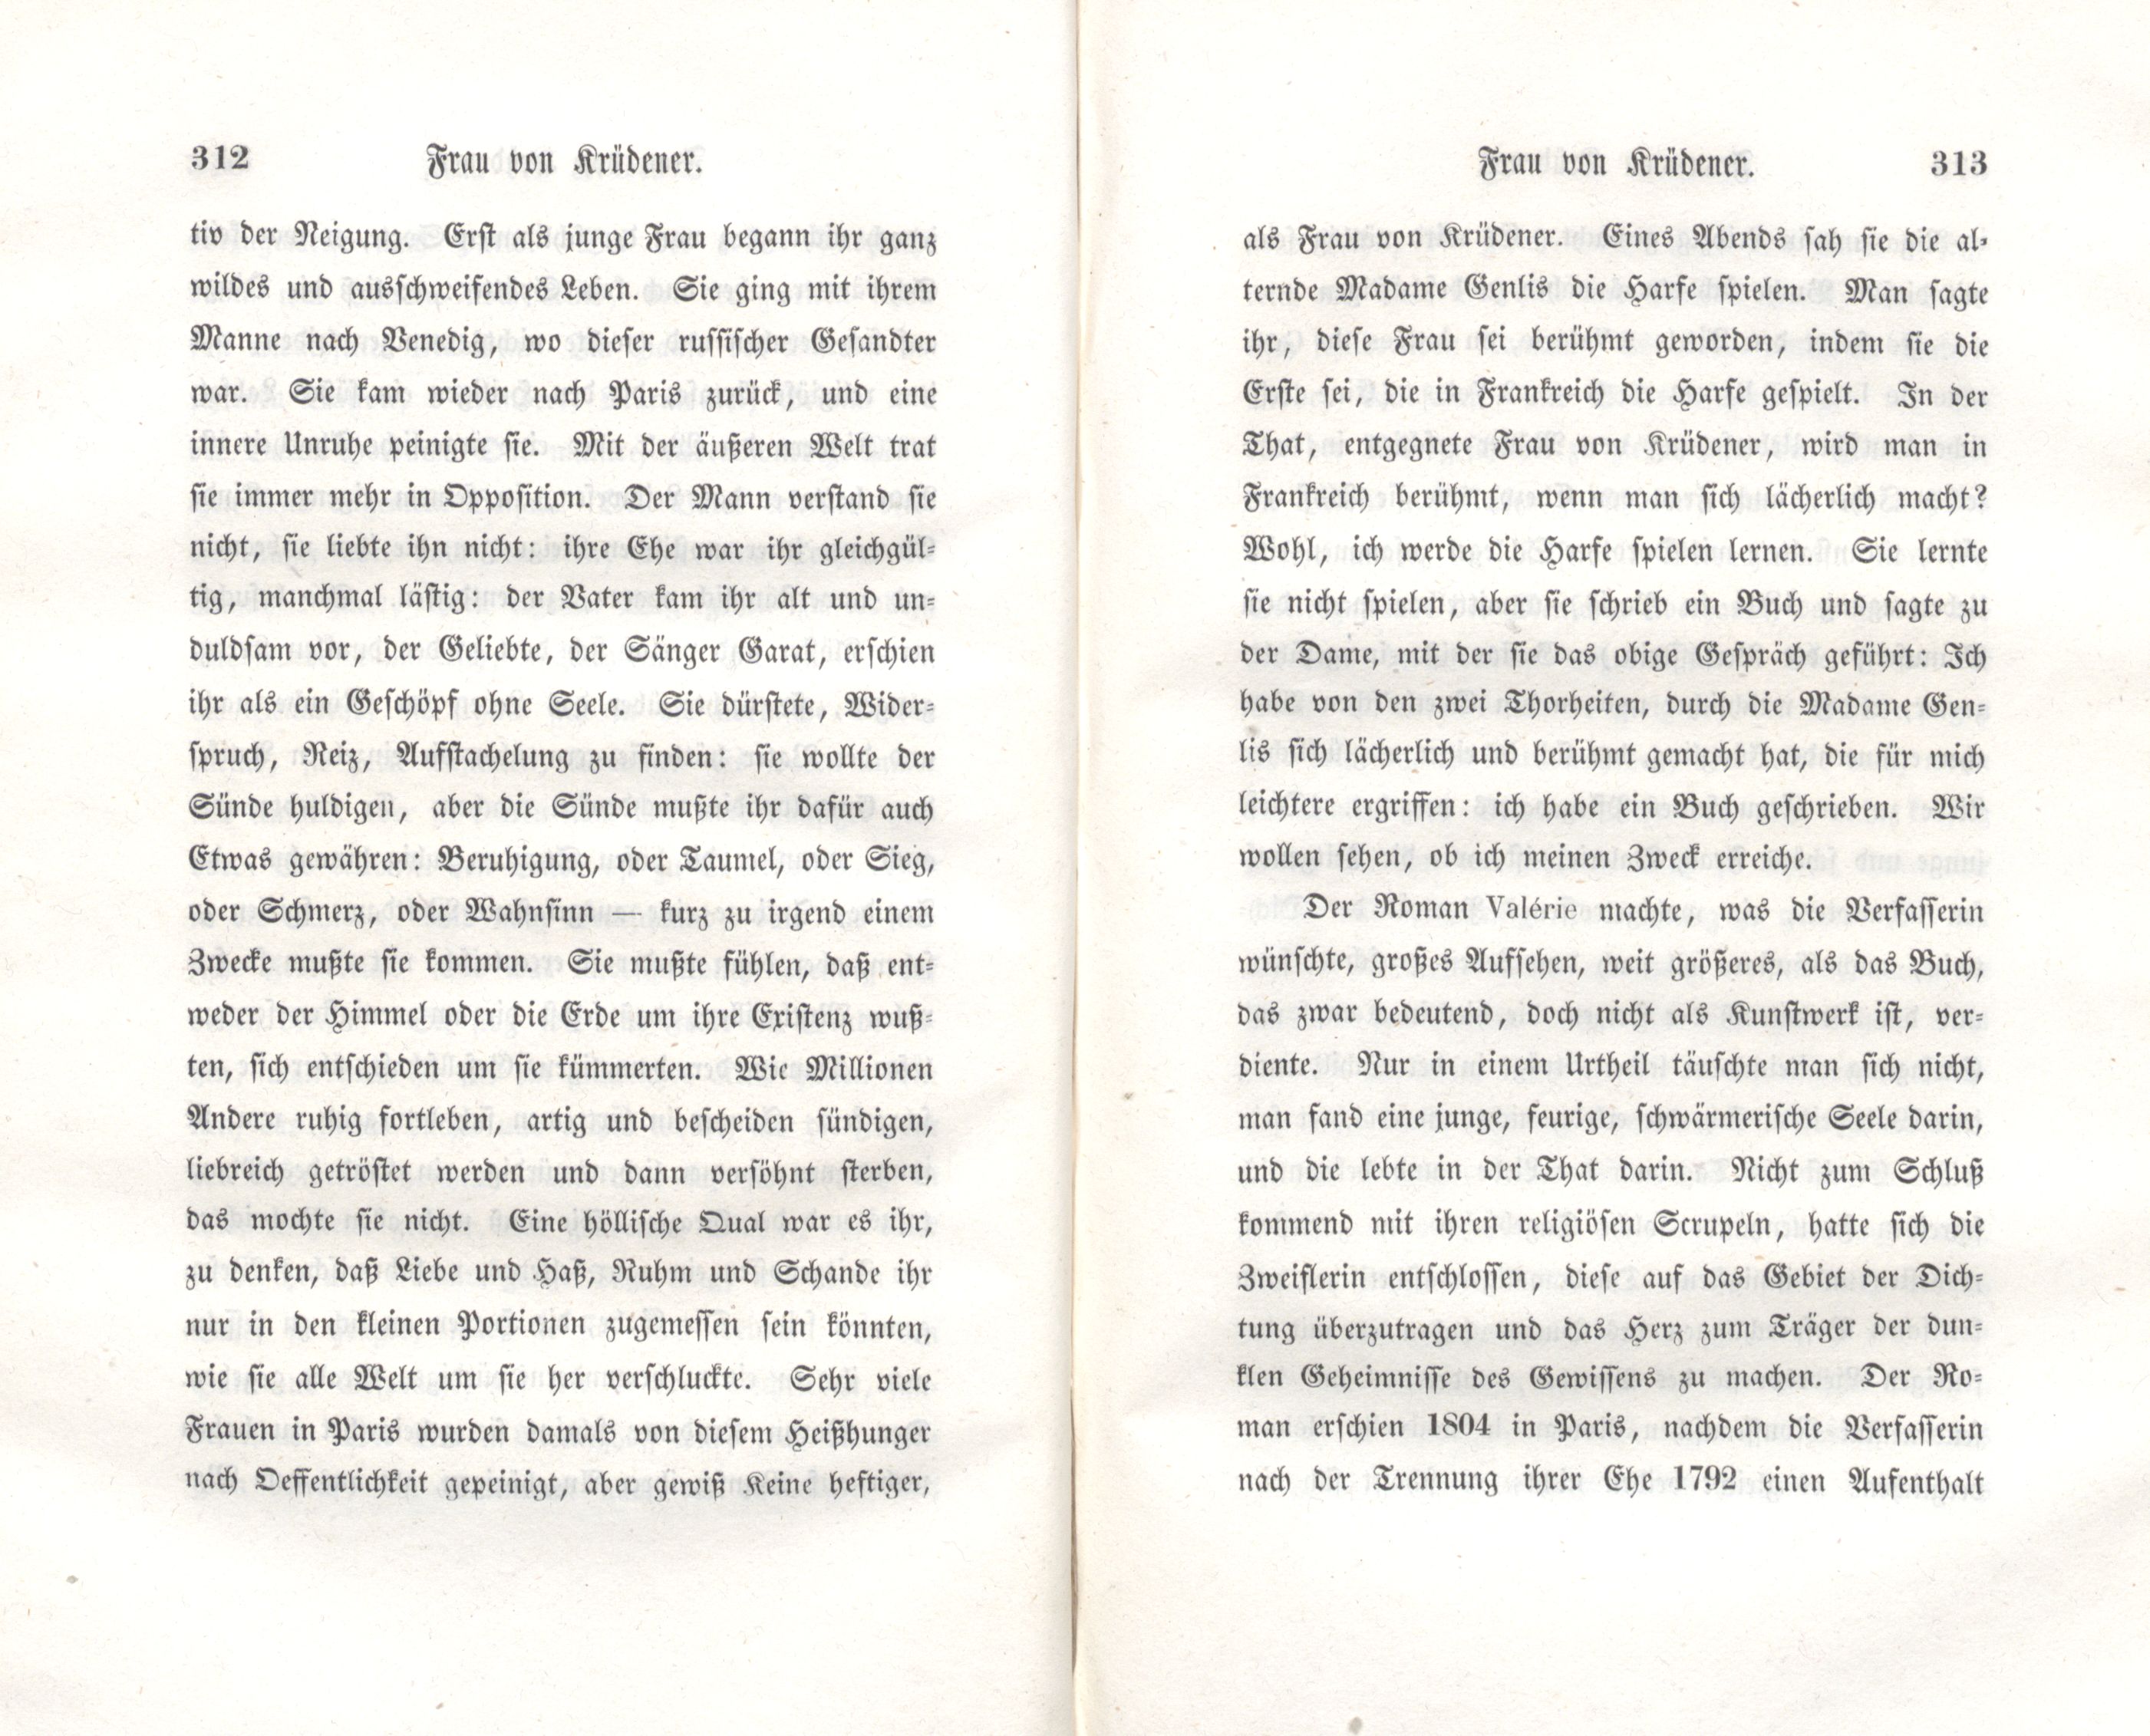 Berühmte deutsche Frauen des achtzehnten Jahrhunderts [1] (1848) | 166. (312-313) Main body of text